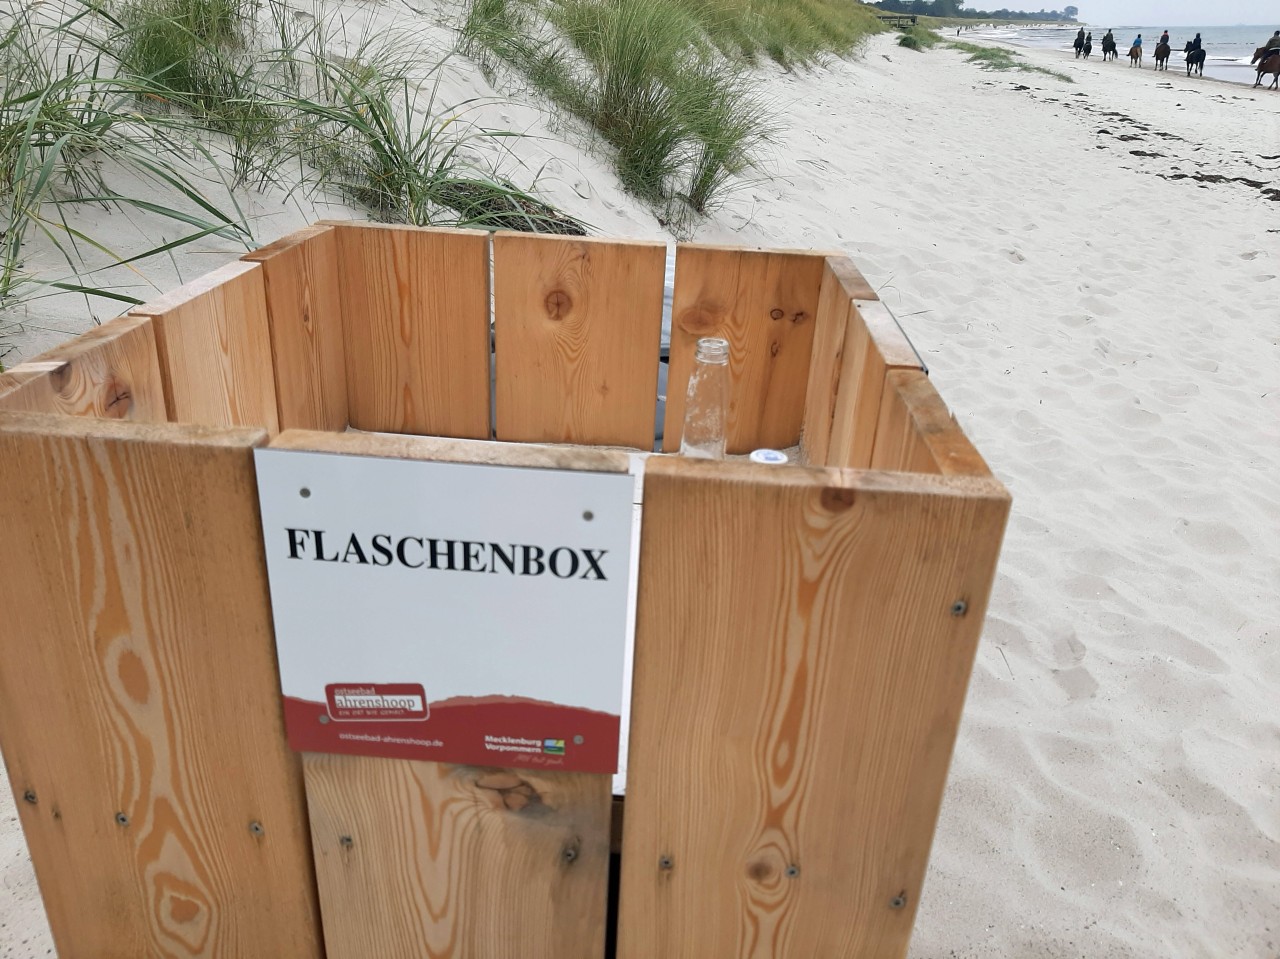 Flaschenbox in Ahrenshoop an der Ostsee.